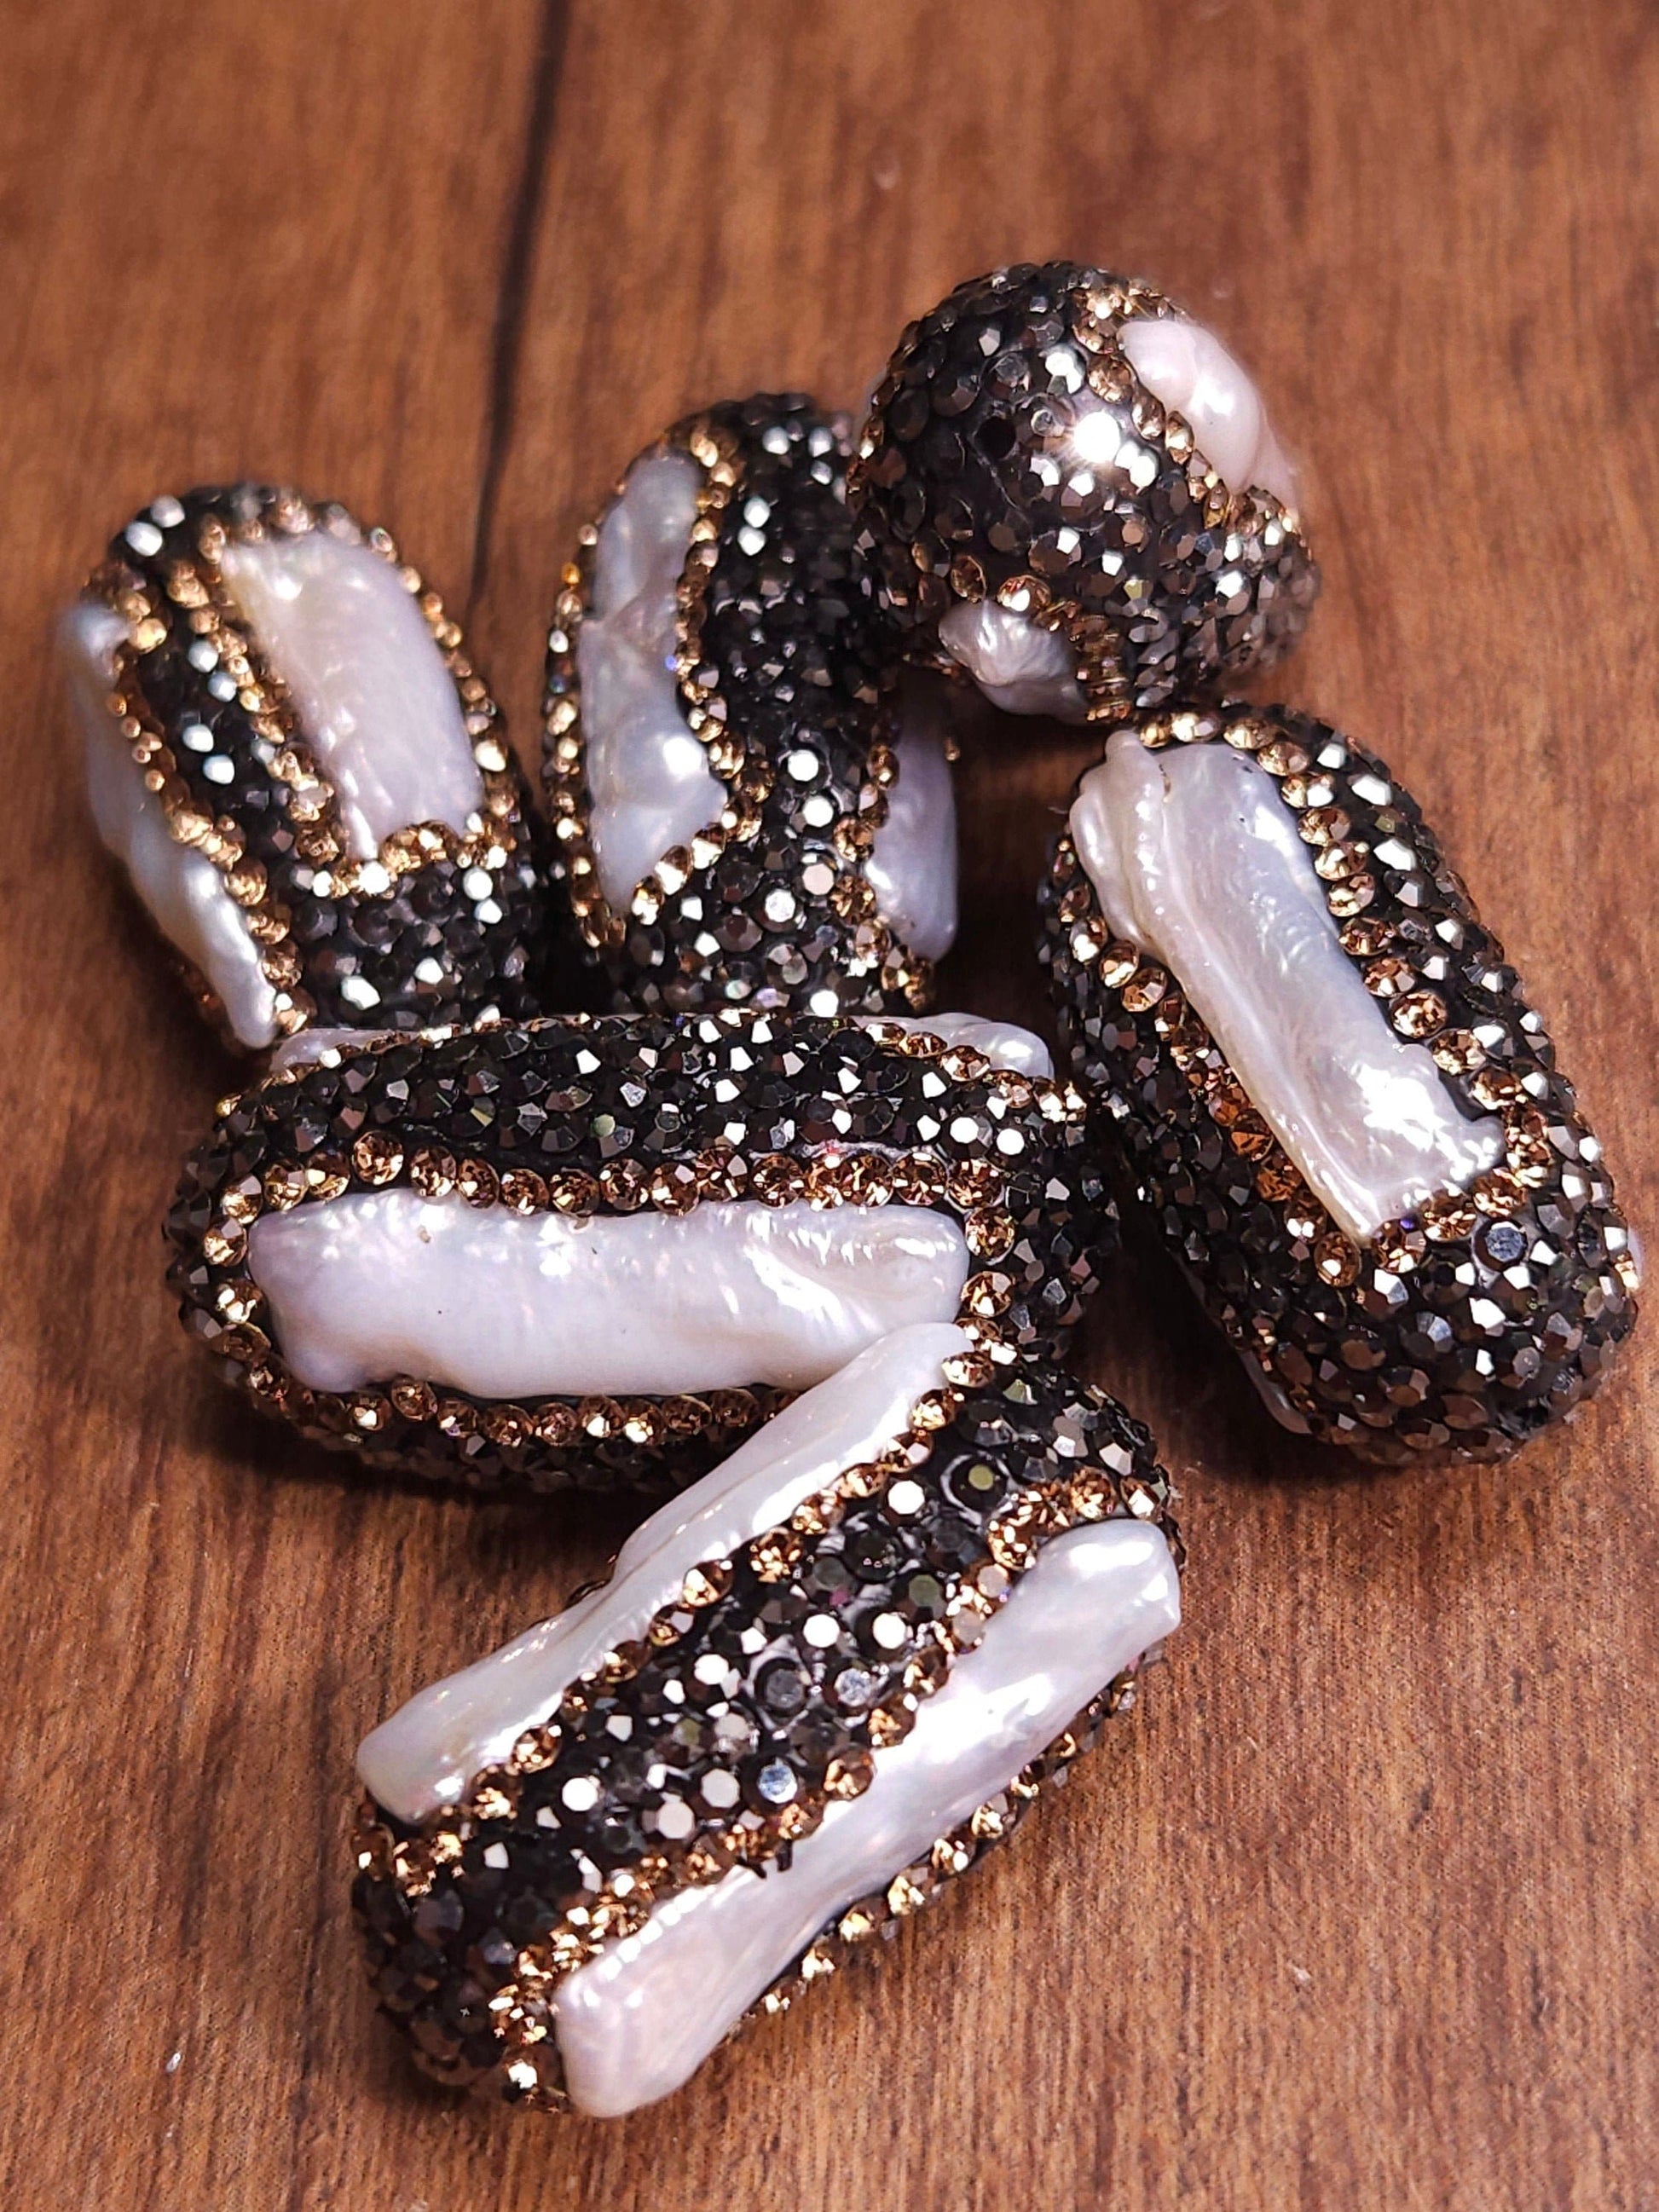 Freshwater Biwa Pearl 3 sided, Multiple Line Inlaid Rhinestone Crystal Handmade Fancy Focal Bead, 26mm Long, 1 pc, Jewelry Making Bling Bead